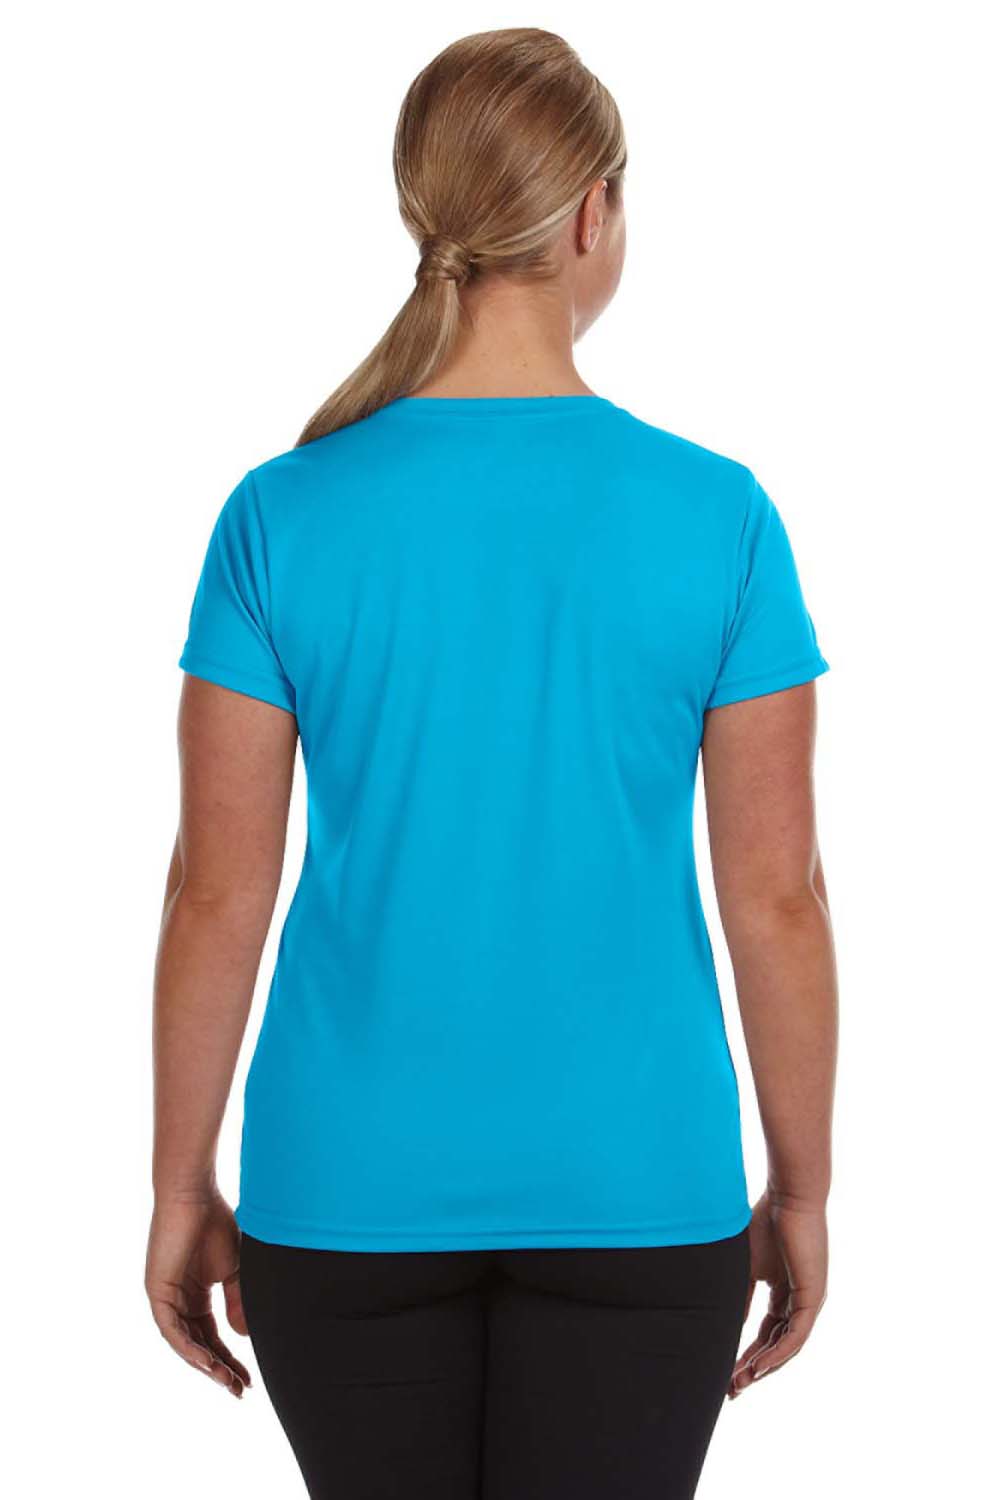 Augusta Sportswear 1790 Womens Moisture Wicking Short Sleeve V-Neck T-Shirt Power Blue Model Back